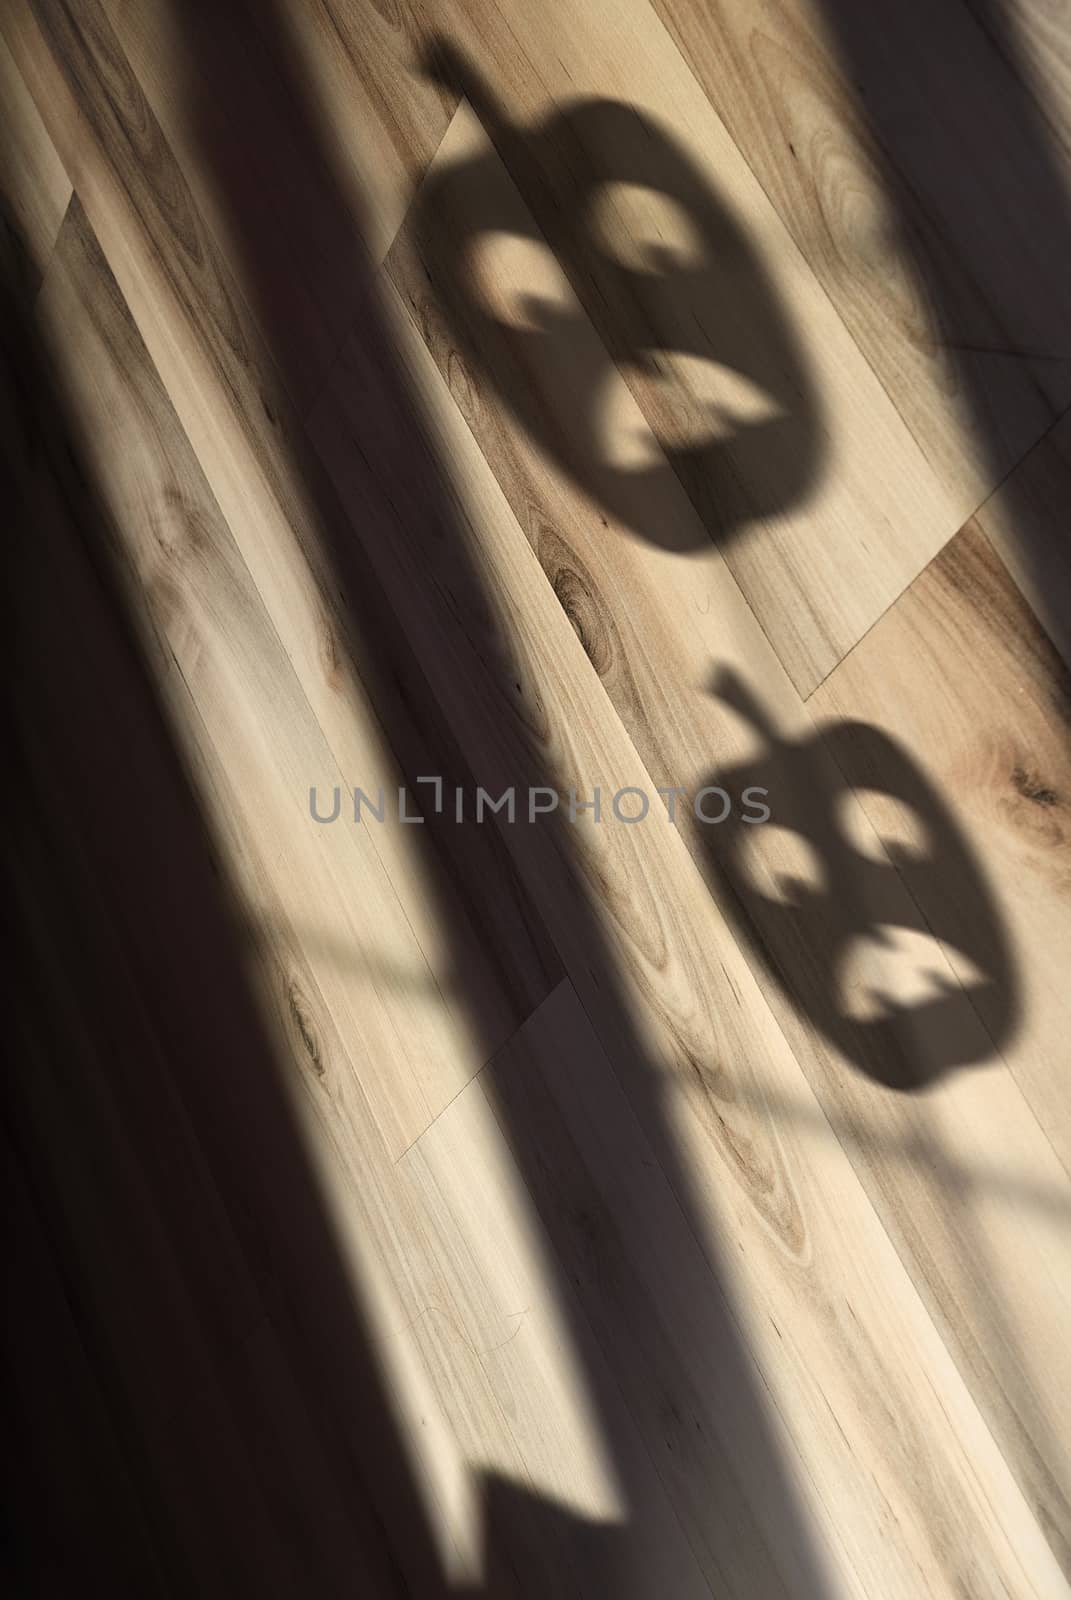 Shadow of Halloween pumpkin on the parquet floor pattern